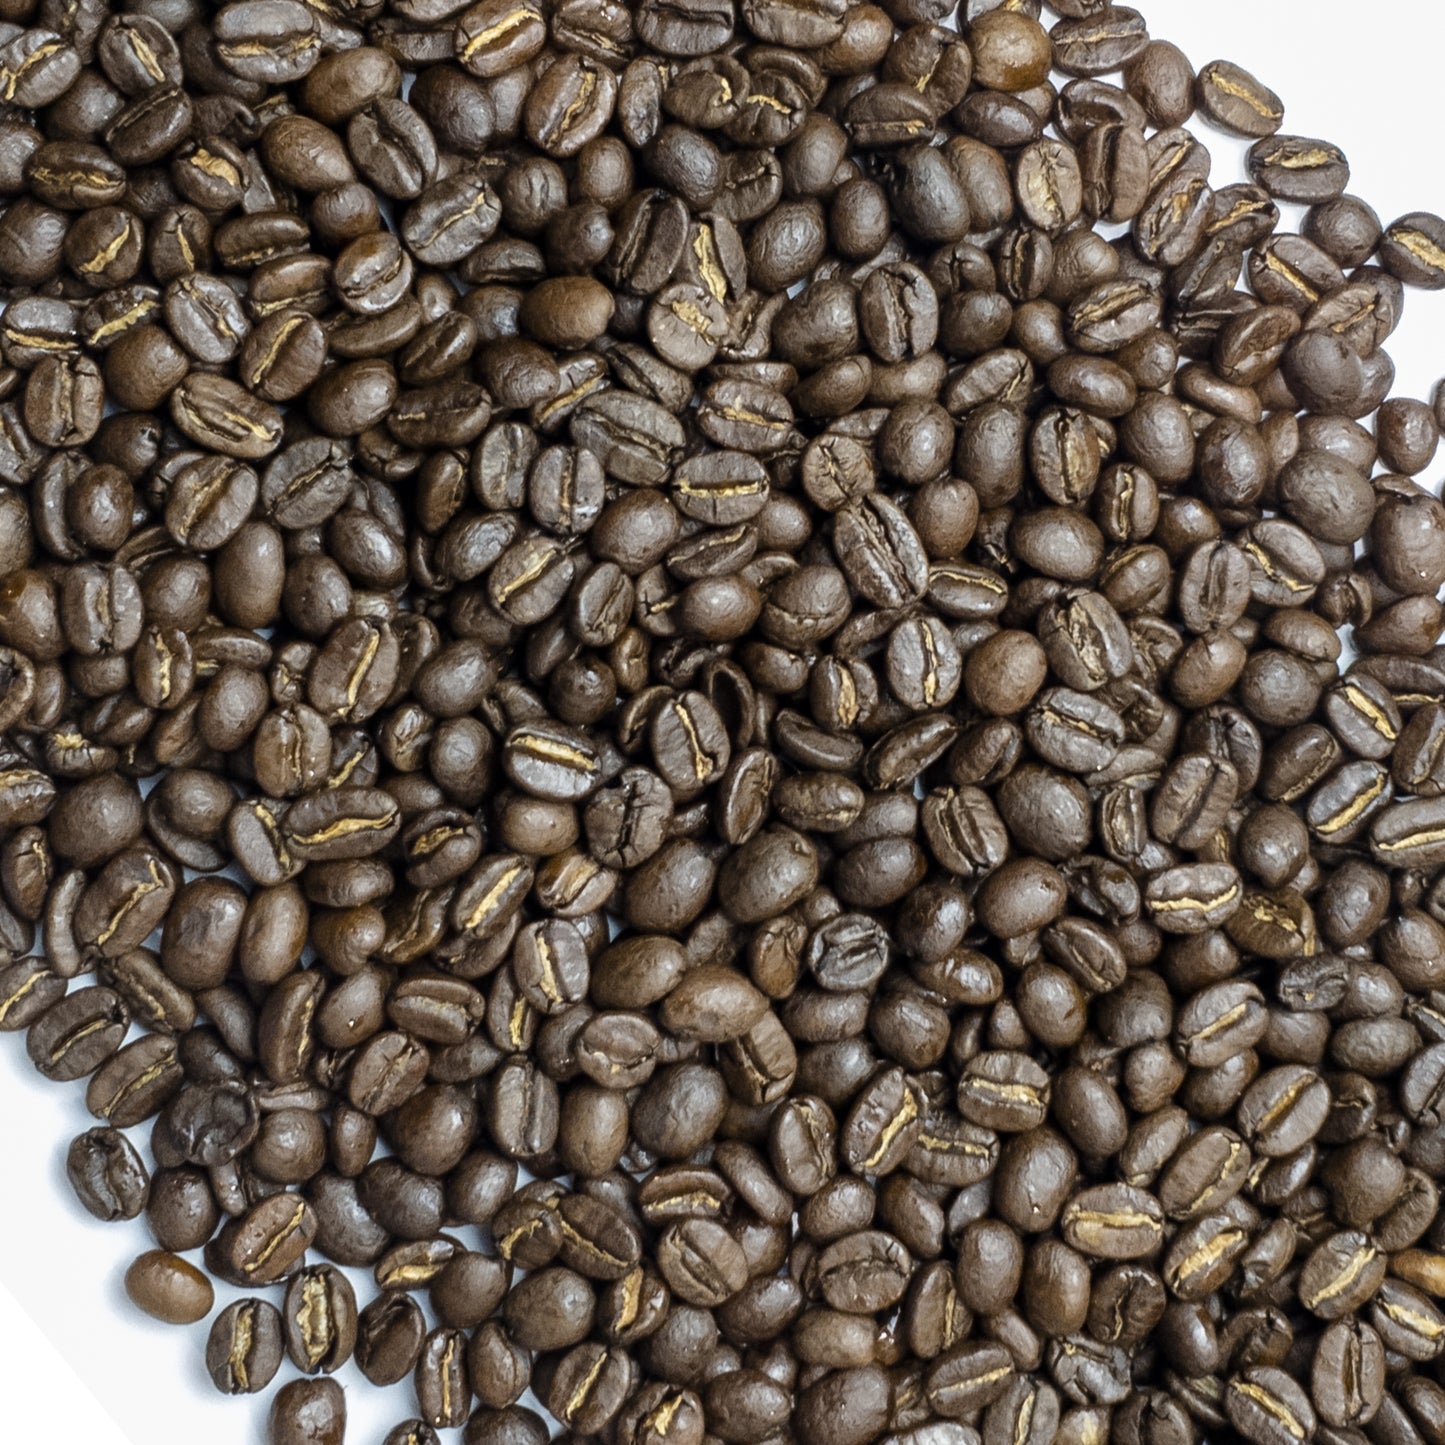 
                  
                    RUSH | Ground Coffee | Dark Roast | Rose Rock Coffee | Air Roasted | 10oz | 12oz | 1lb | 5lb | Sample
                  
                